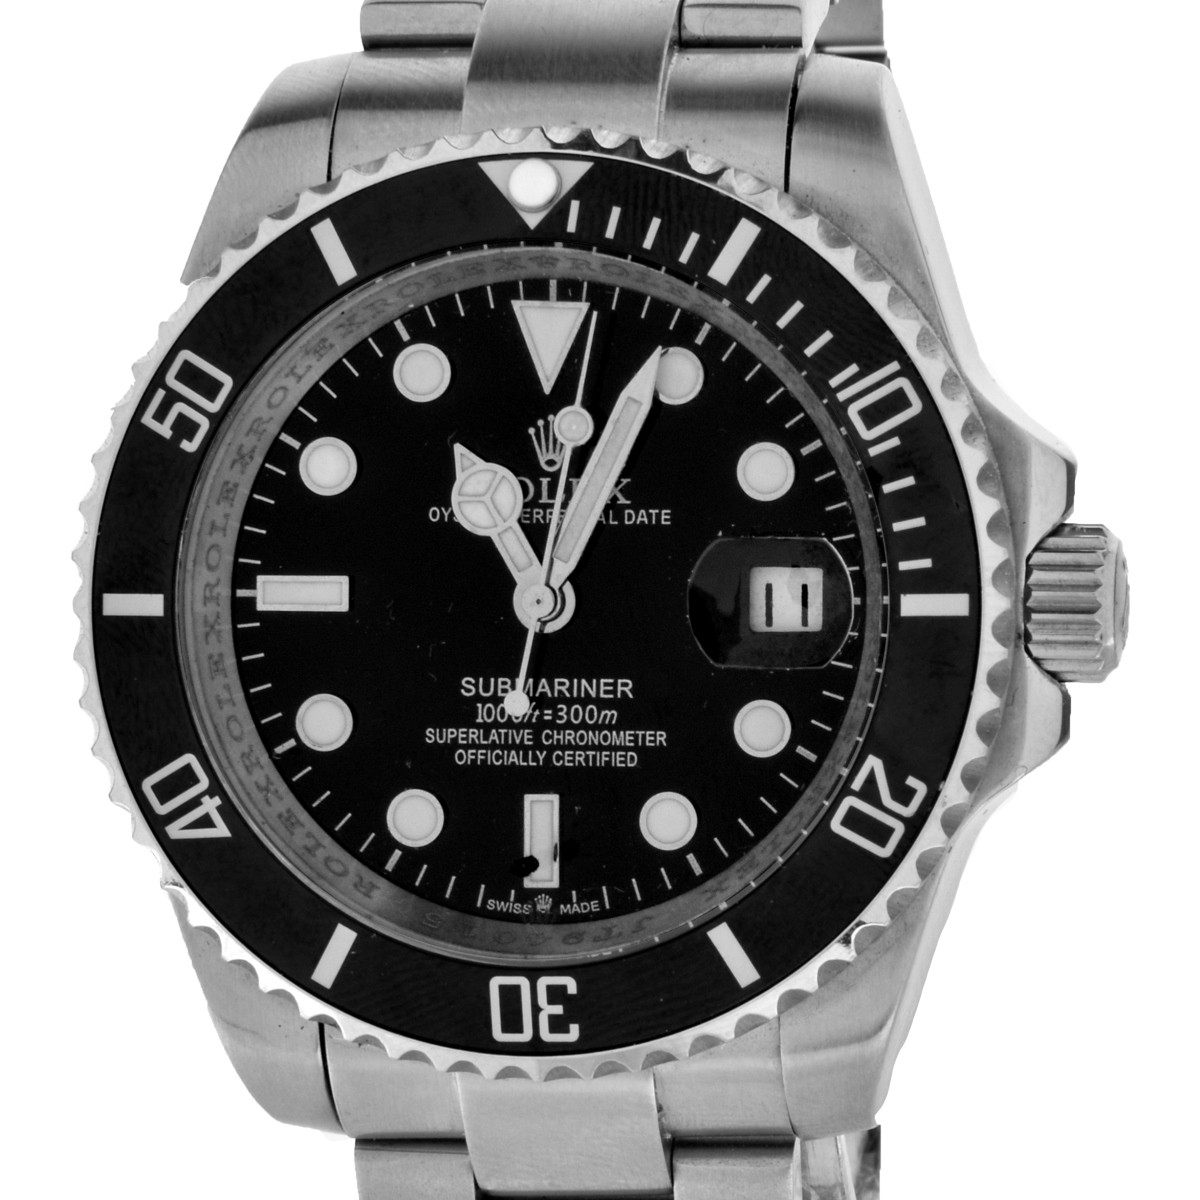 Replica "Rolex Submariner" Watch